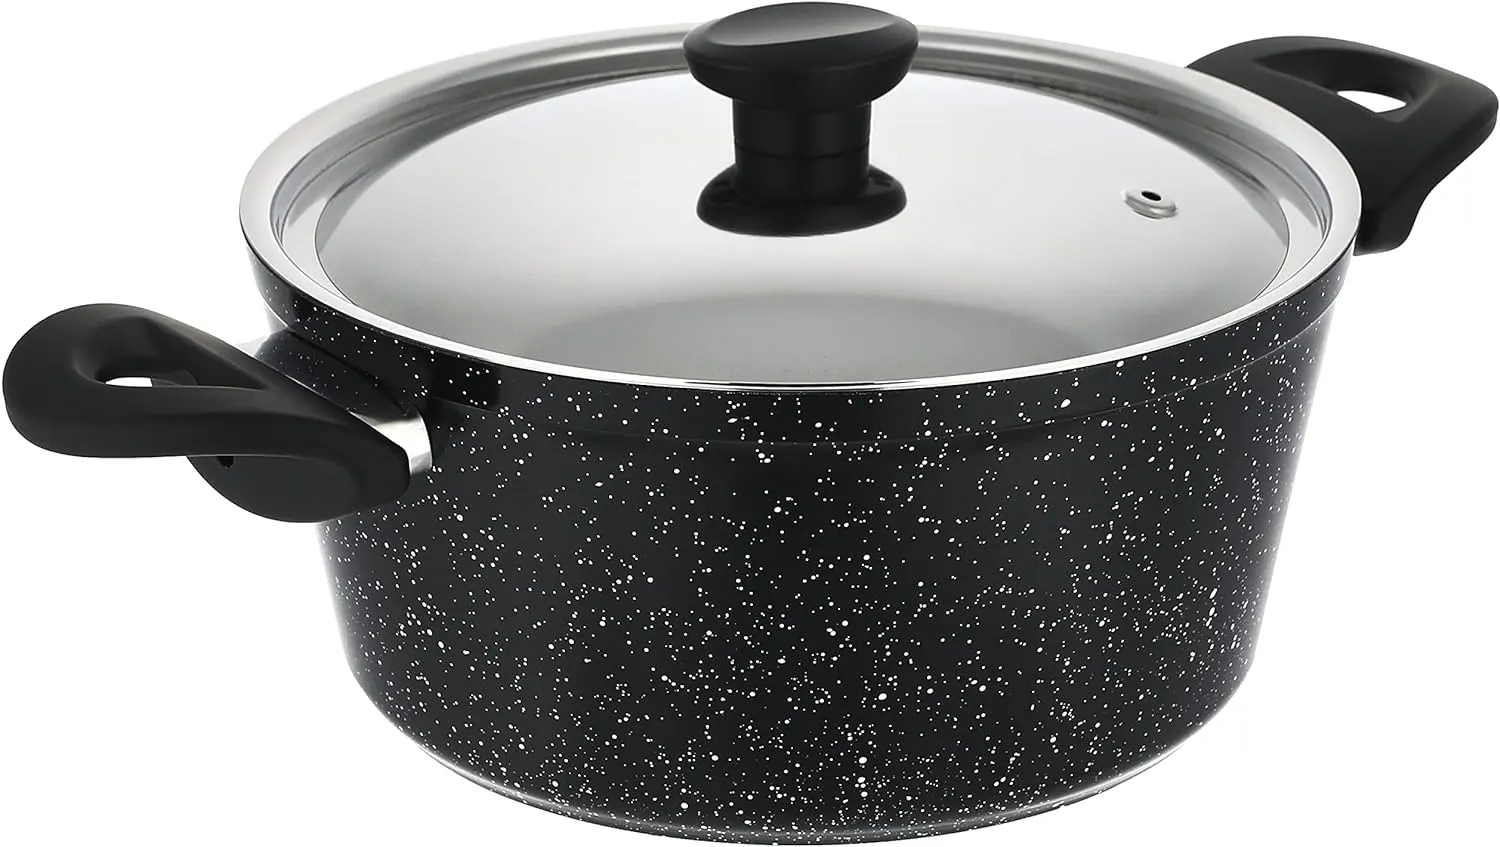 Top Chef Granite pot , size 18 cm, black and burgundy